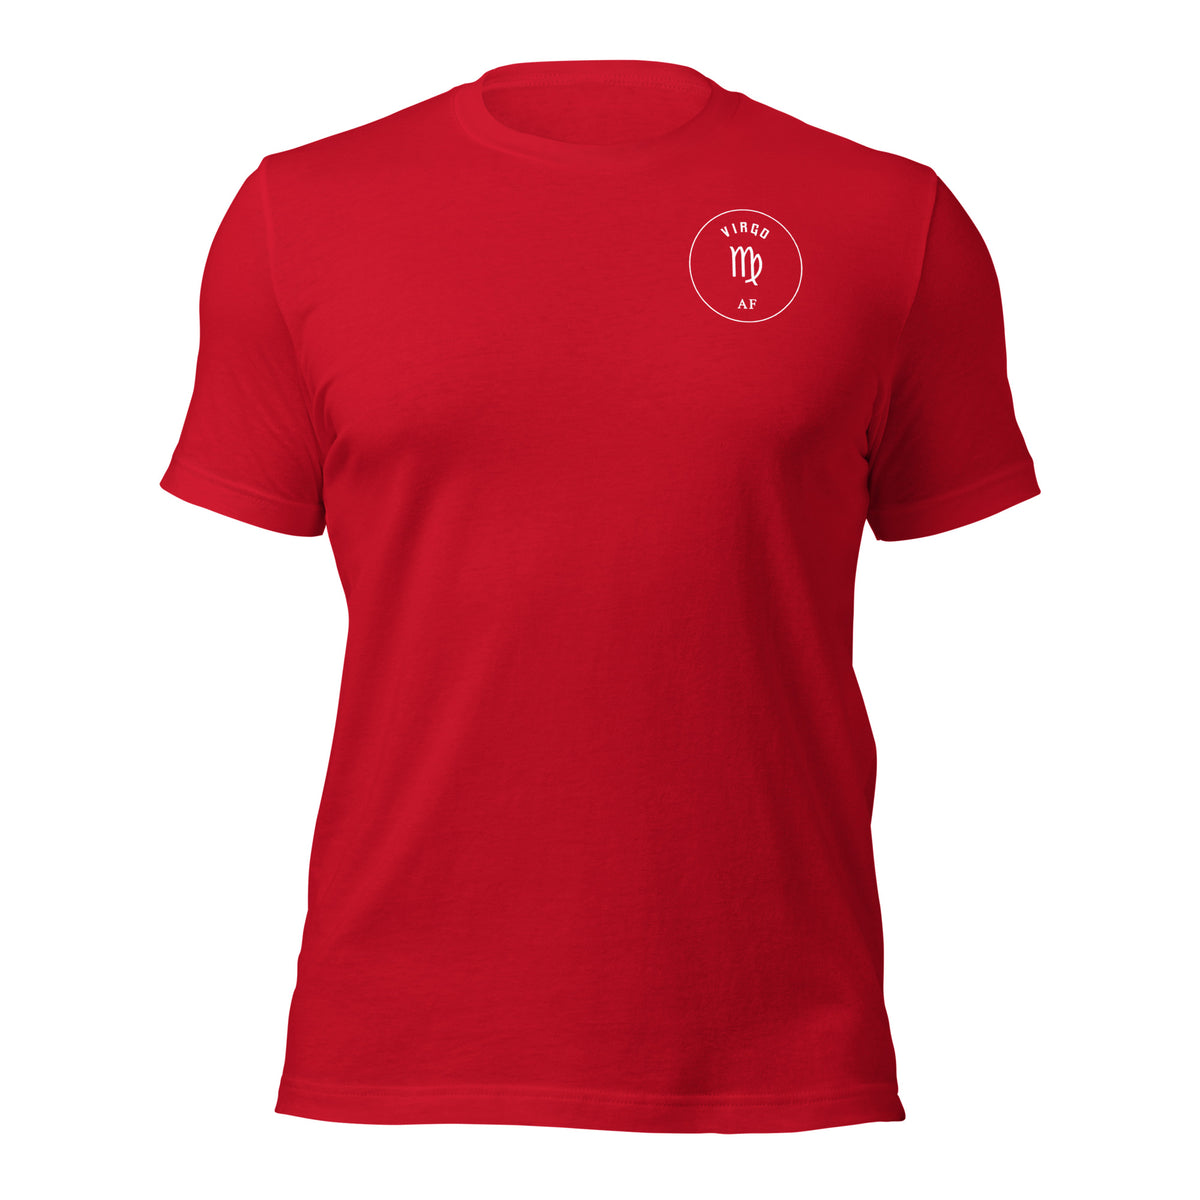 Virgo Alpha Female T-Shirt